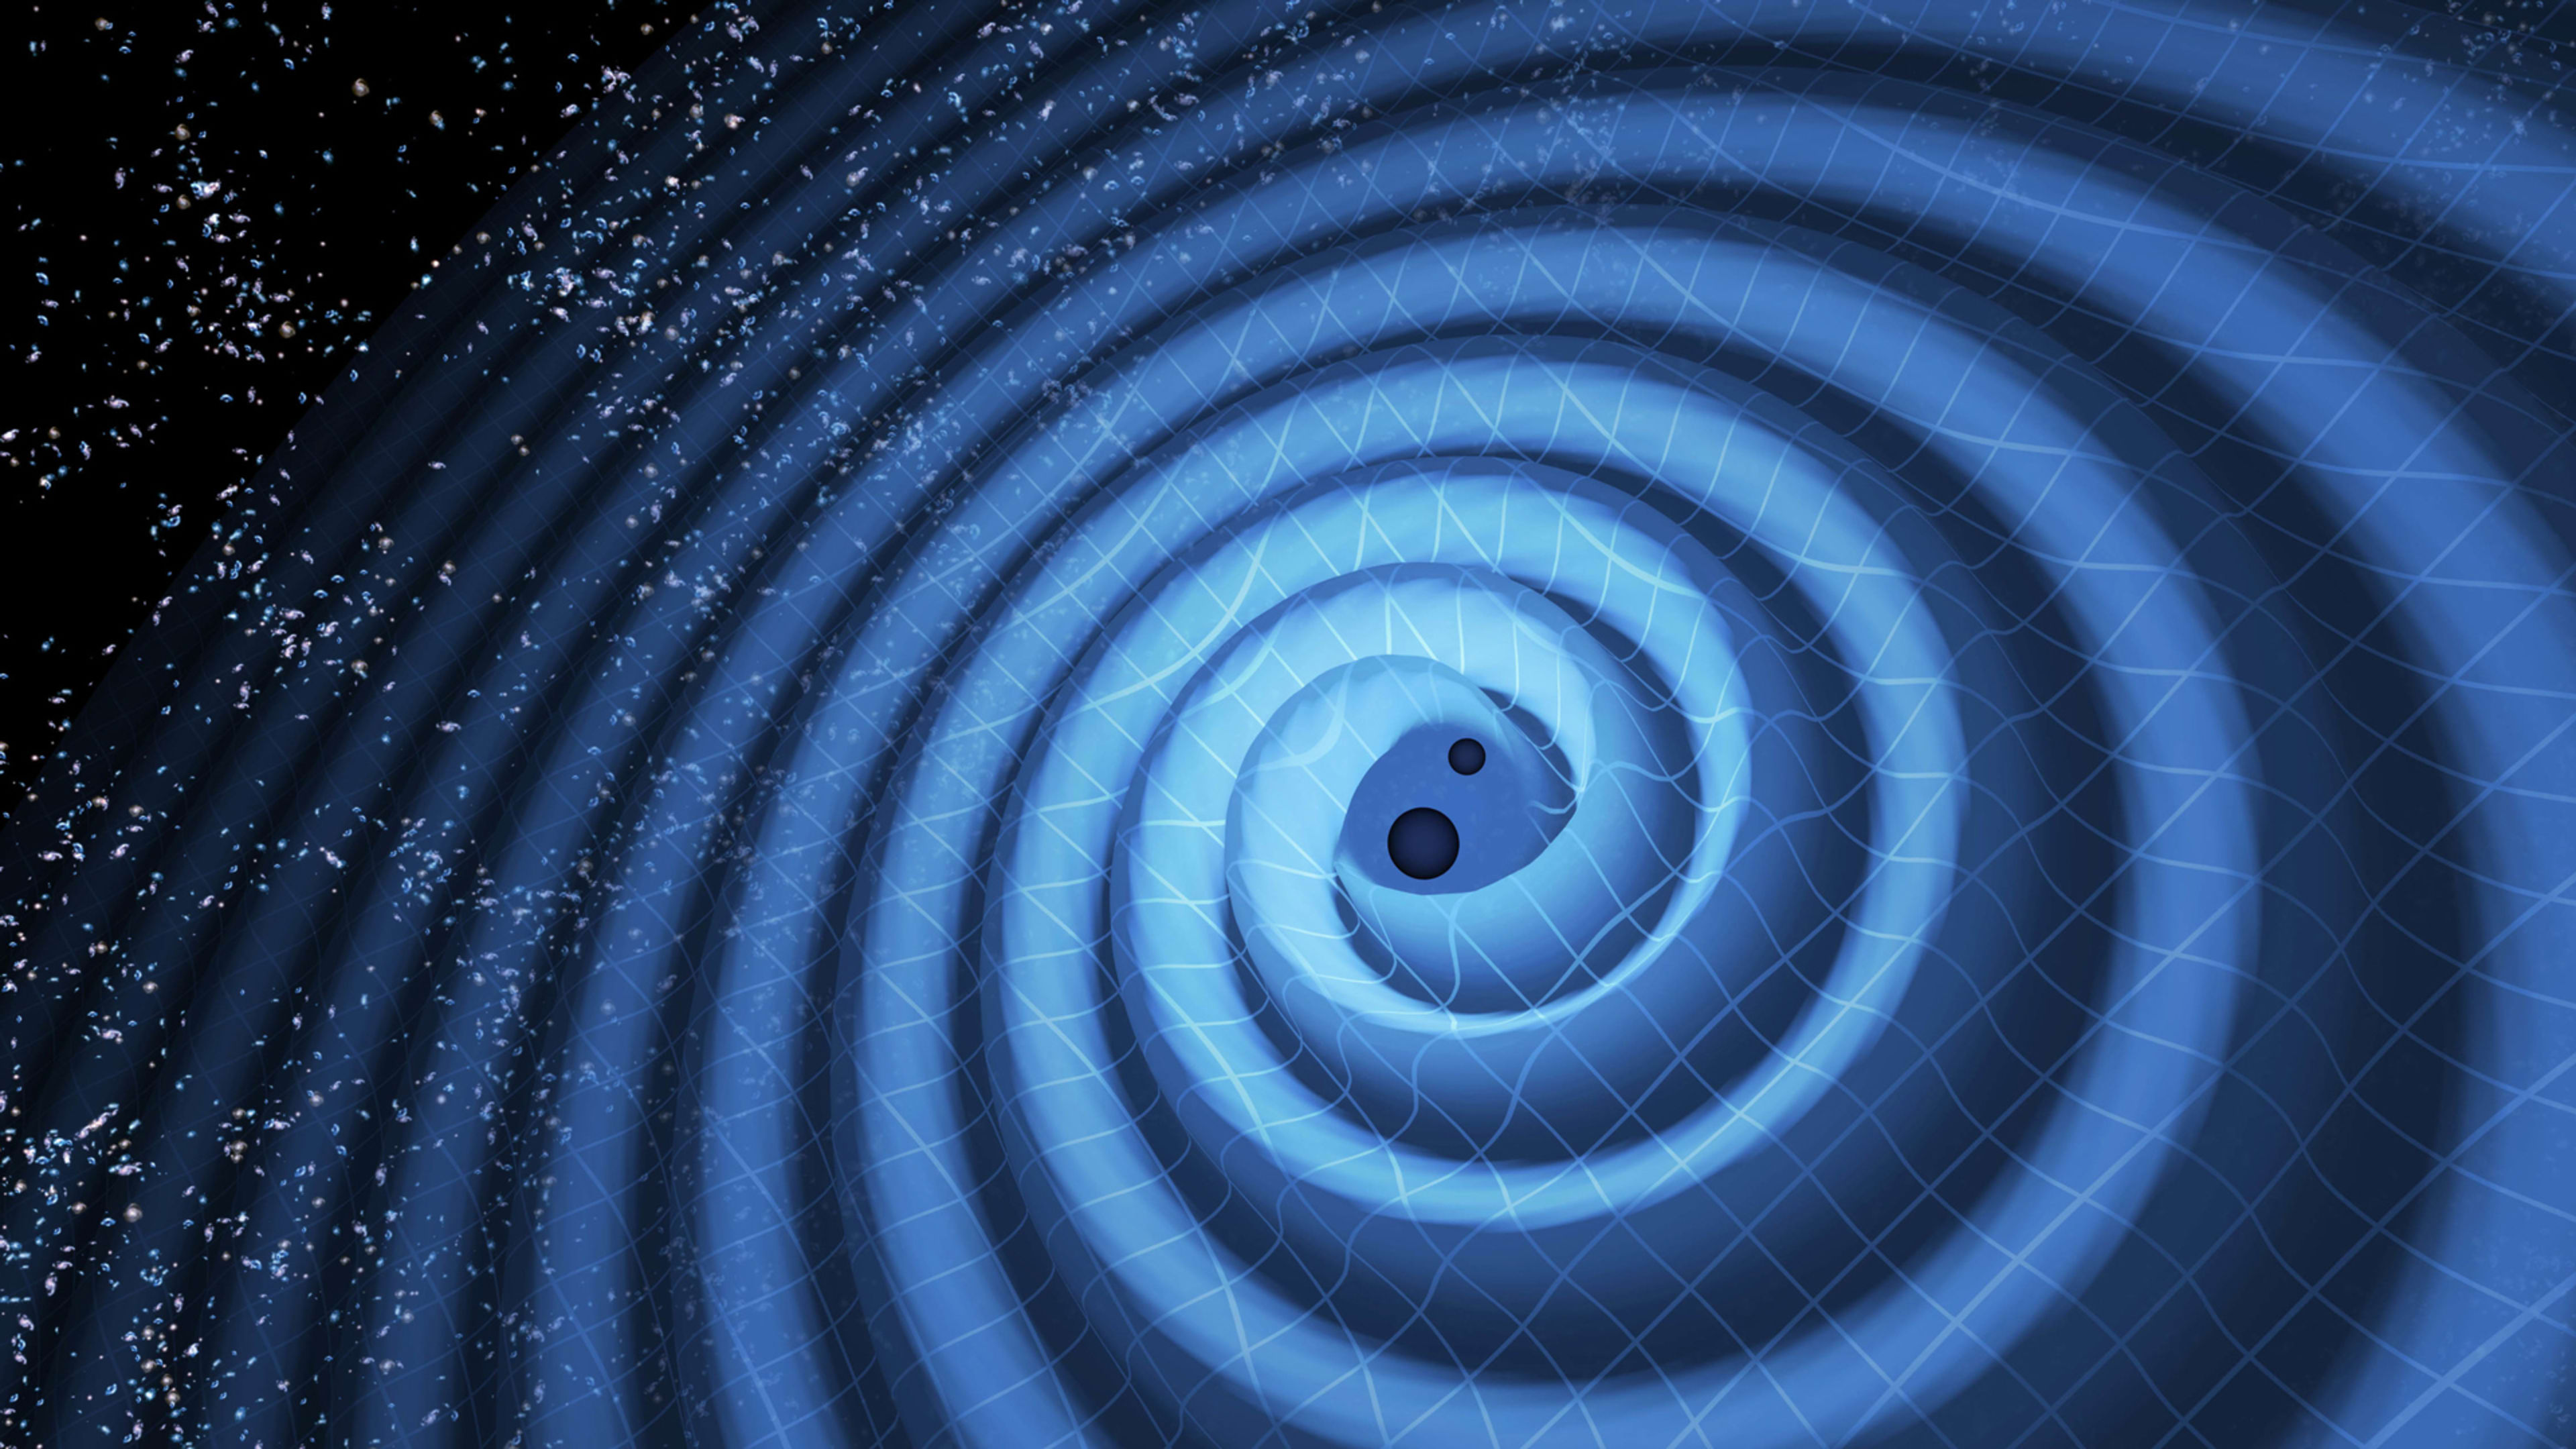 What the gravitational wave detector LIGO reveals about the universe